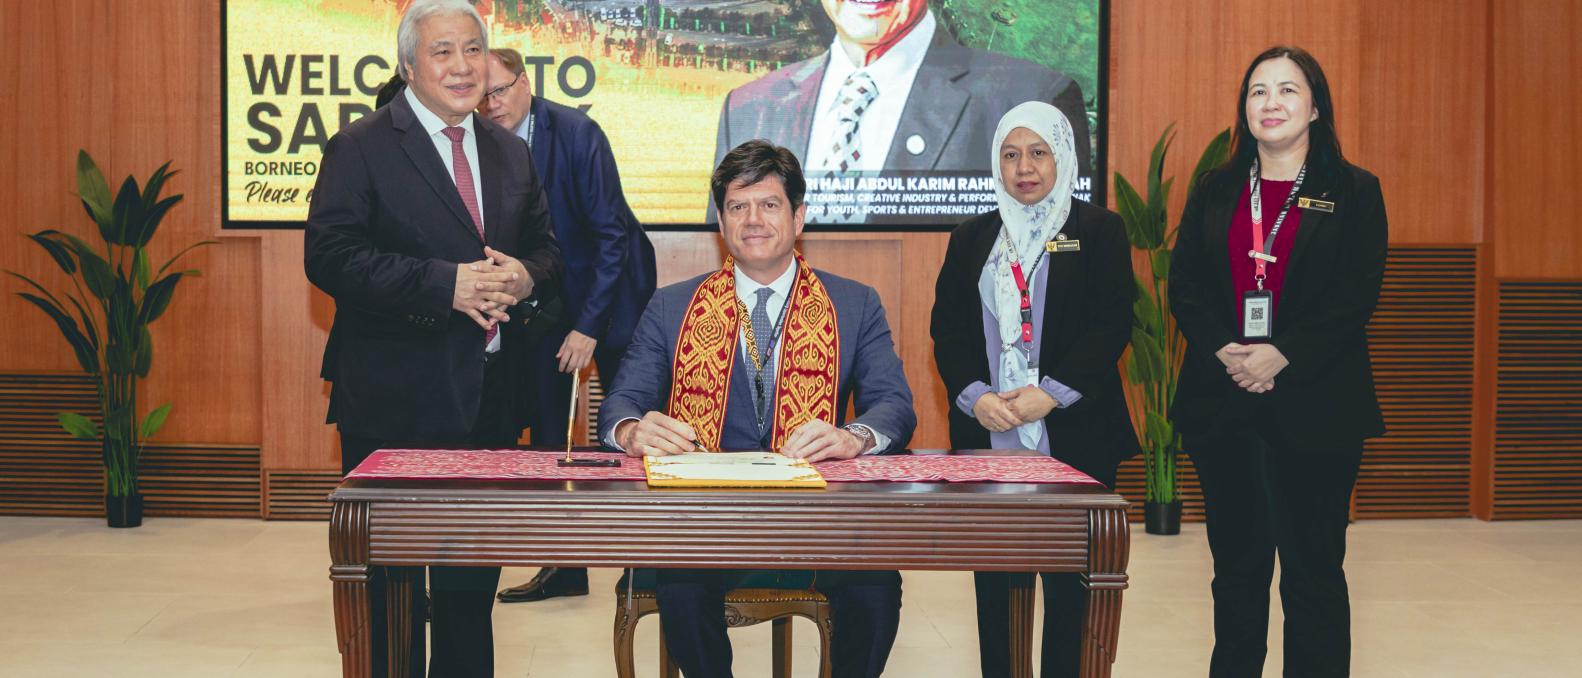 Ambassador Rokas signing the visitors book at the Borneo Cultures Museum